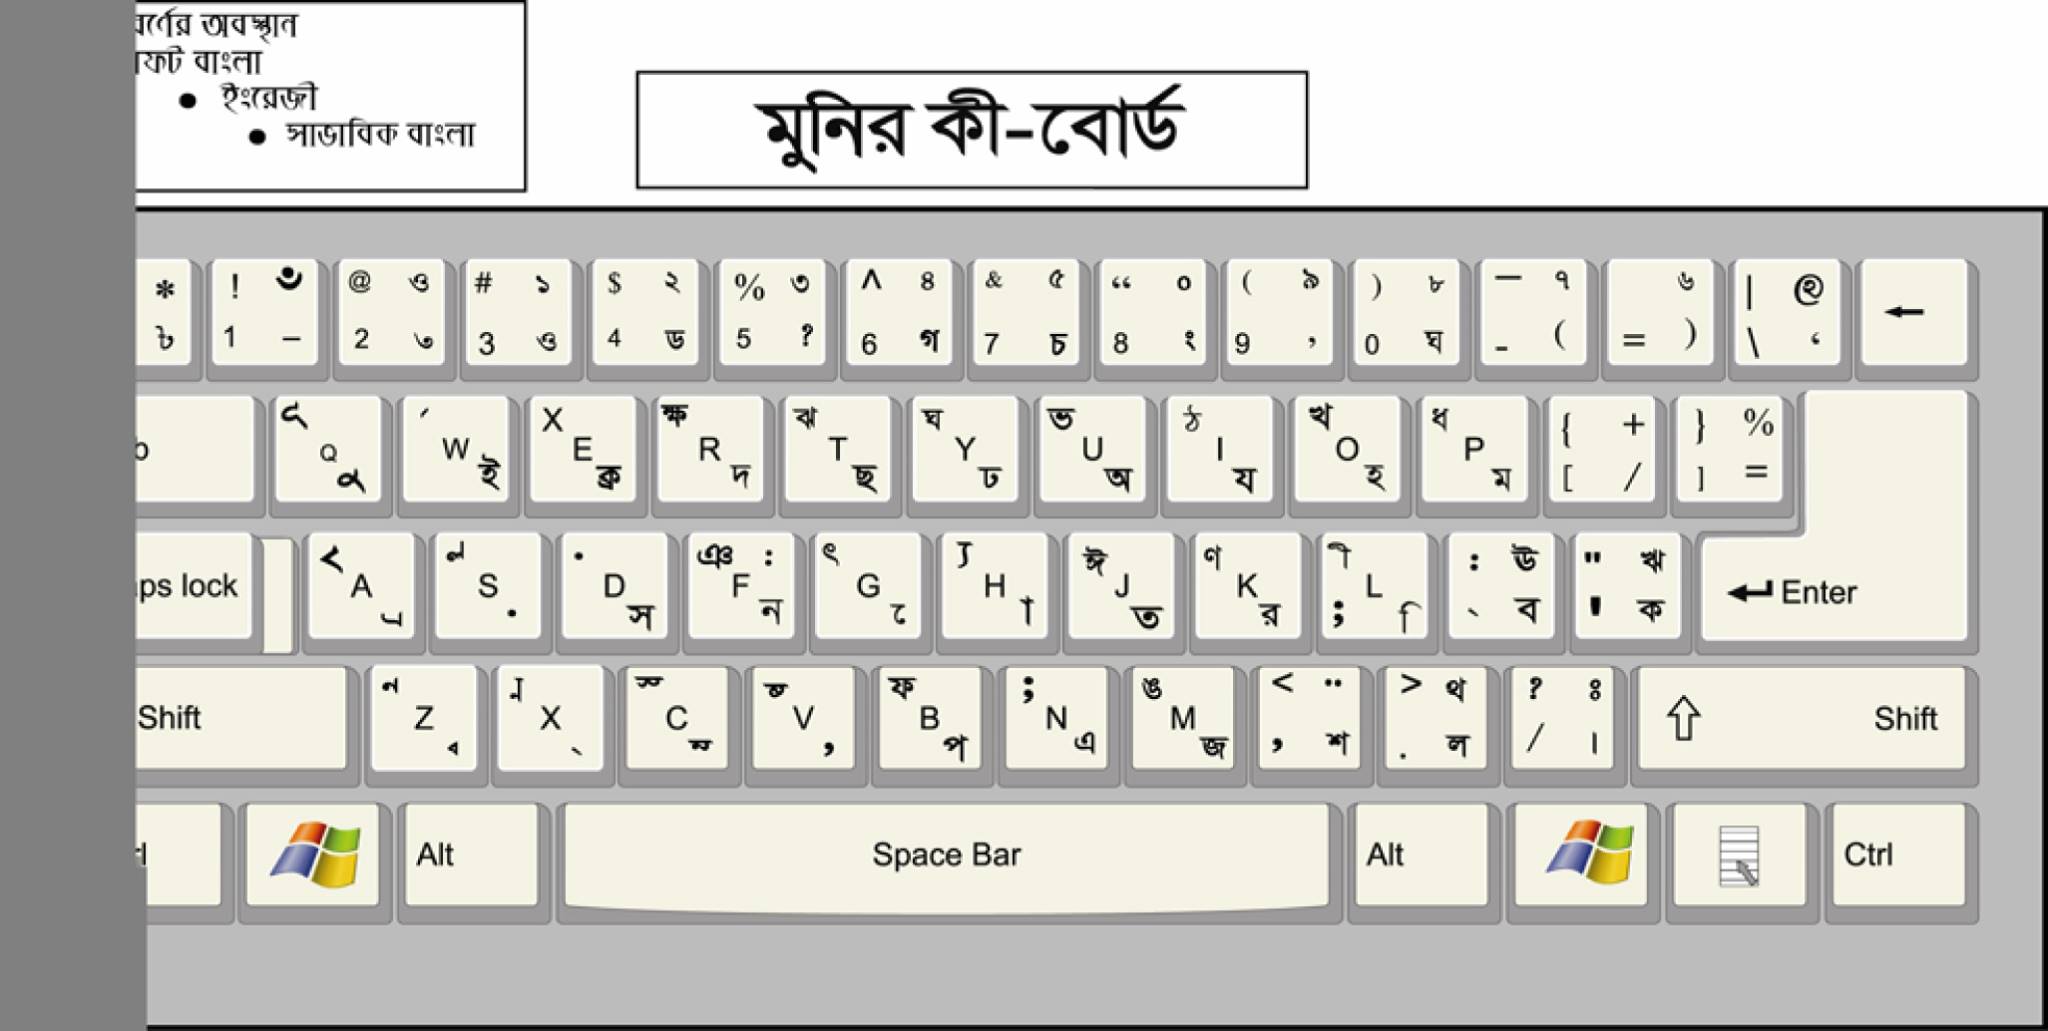 Bijoy bayanno 2015 keyboard layout